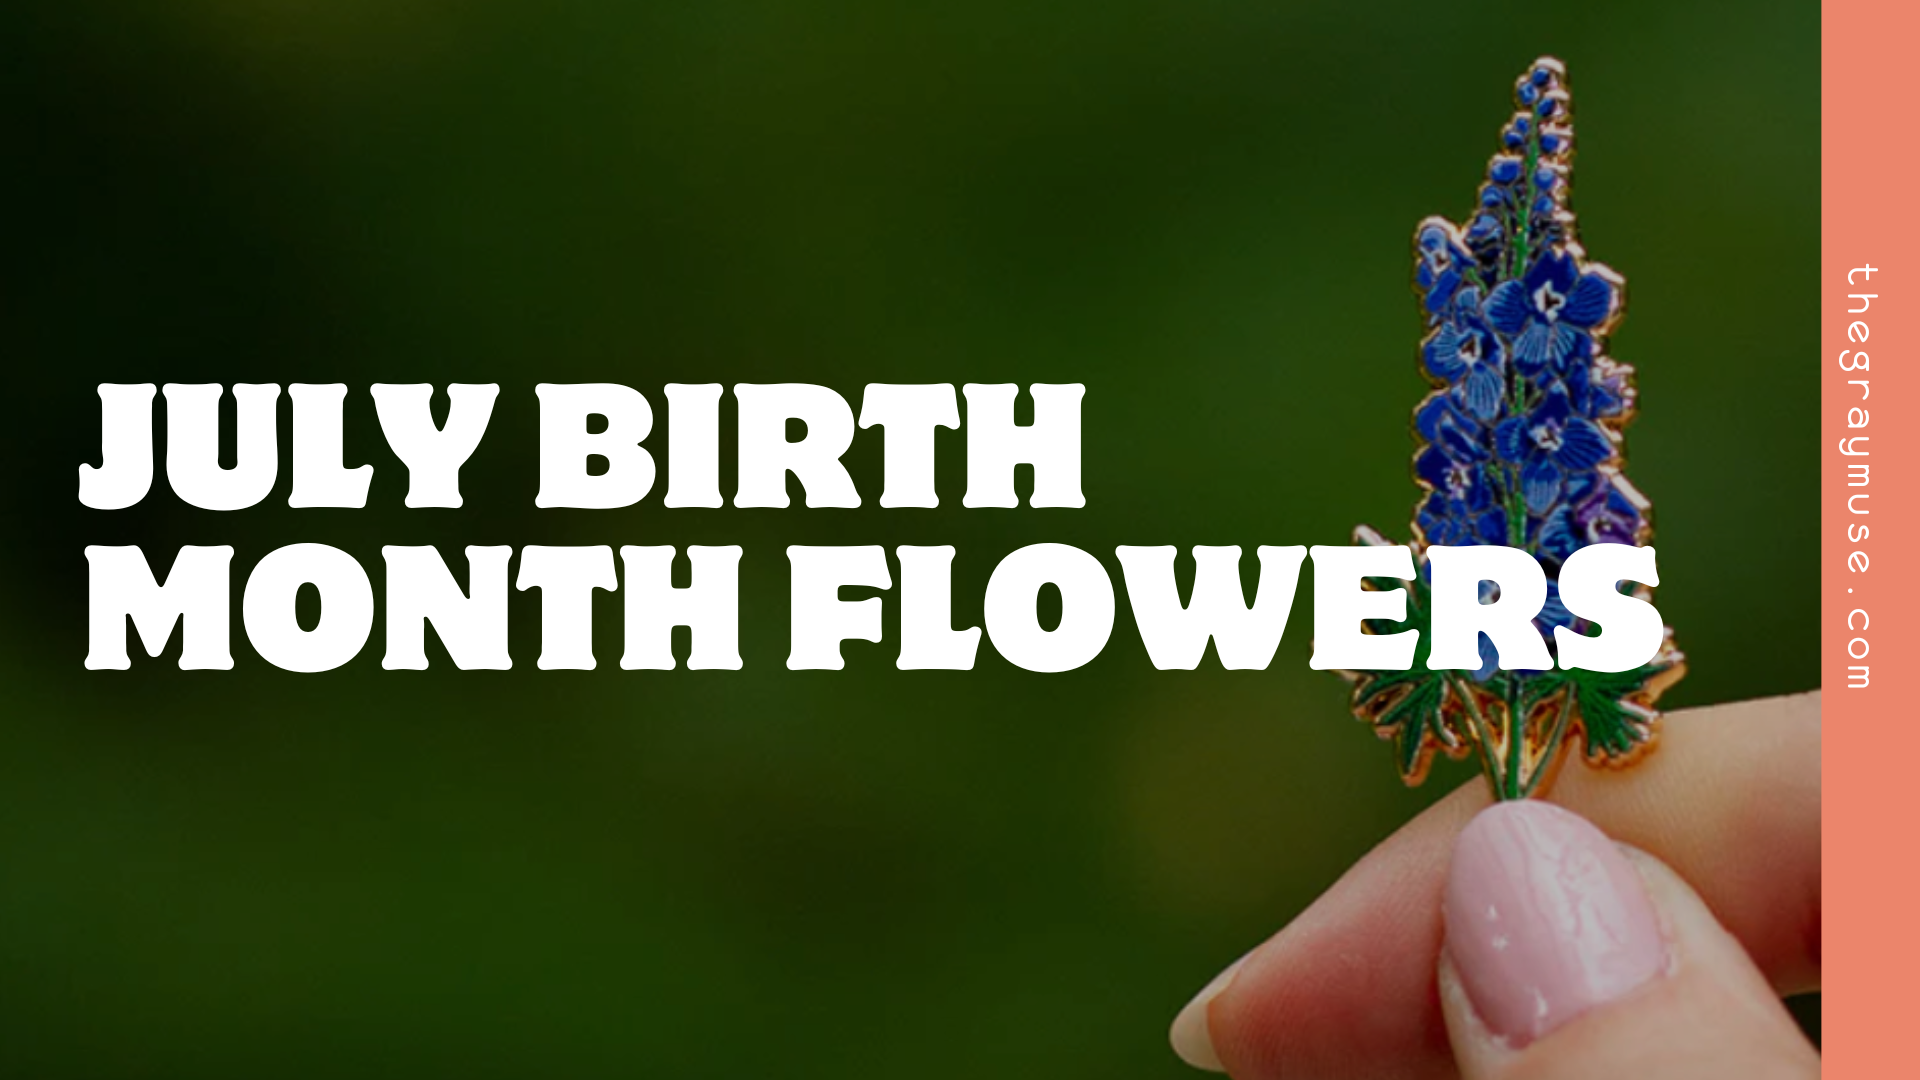 July Birth Month Flowers